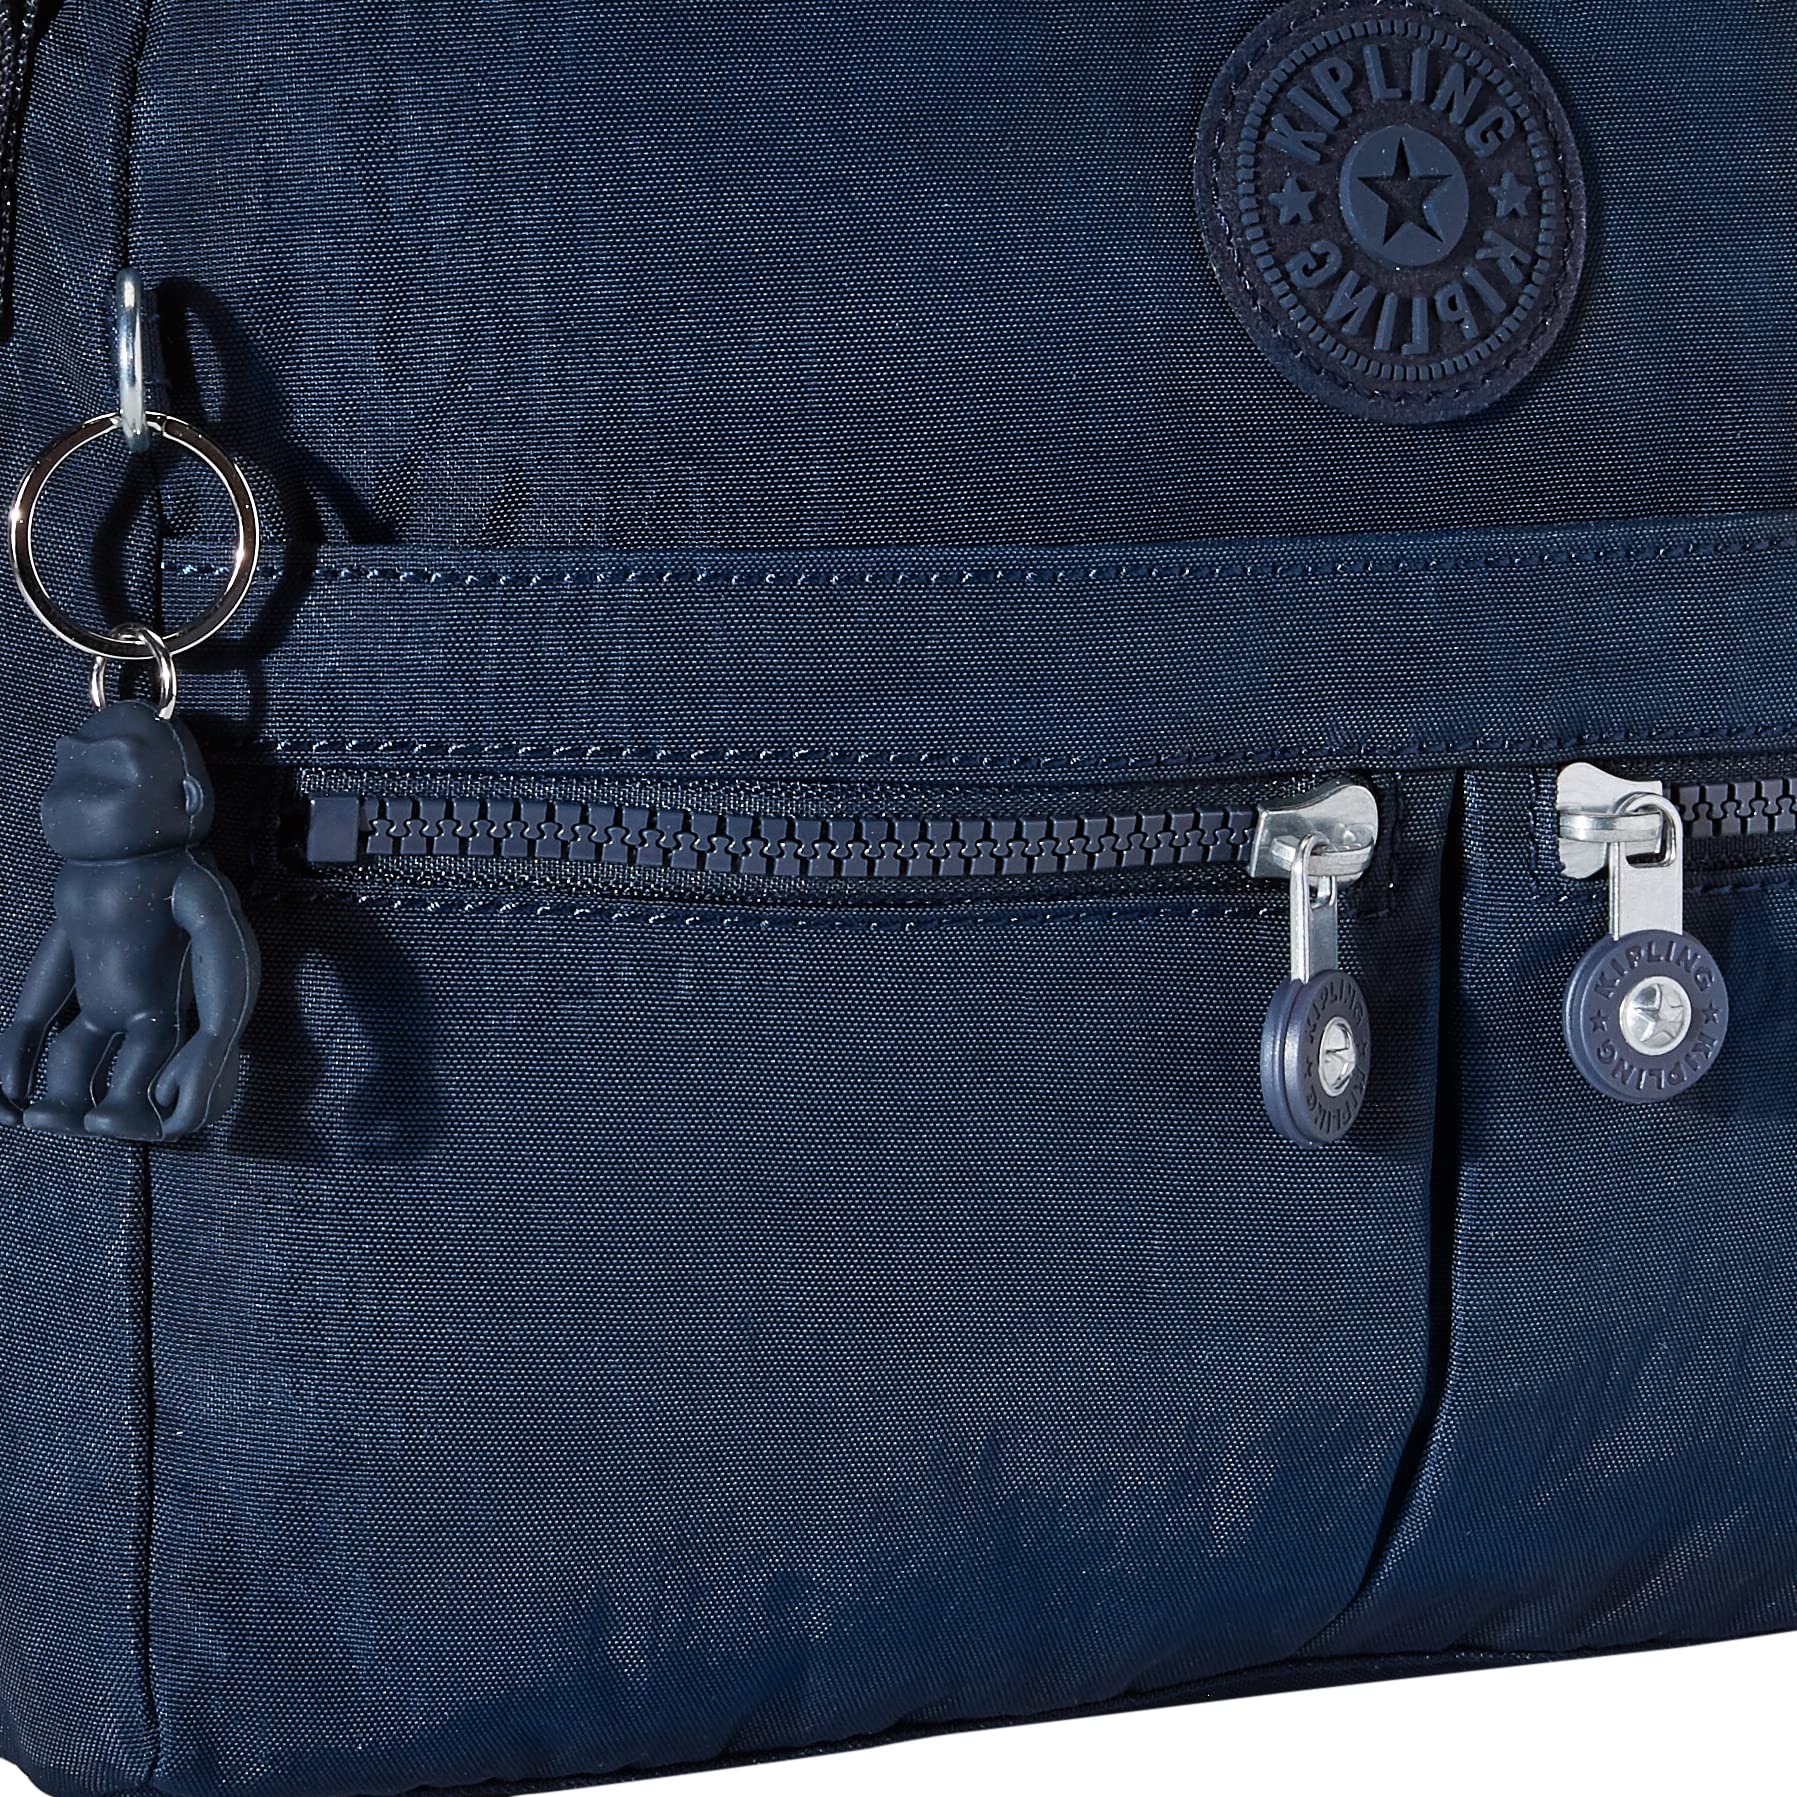 Kipling Women's New Angie Handbag, Lightweight Crossbody, Nylon Travel Bag